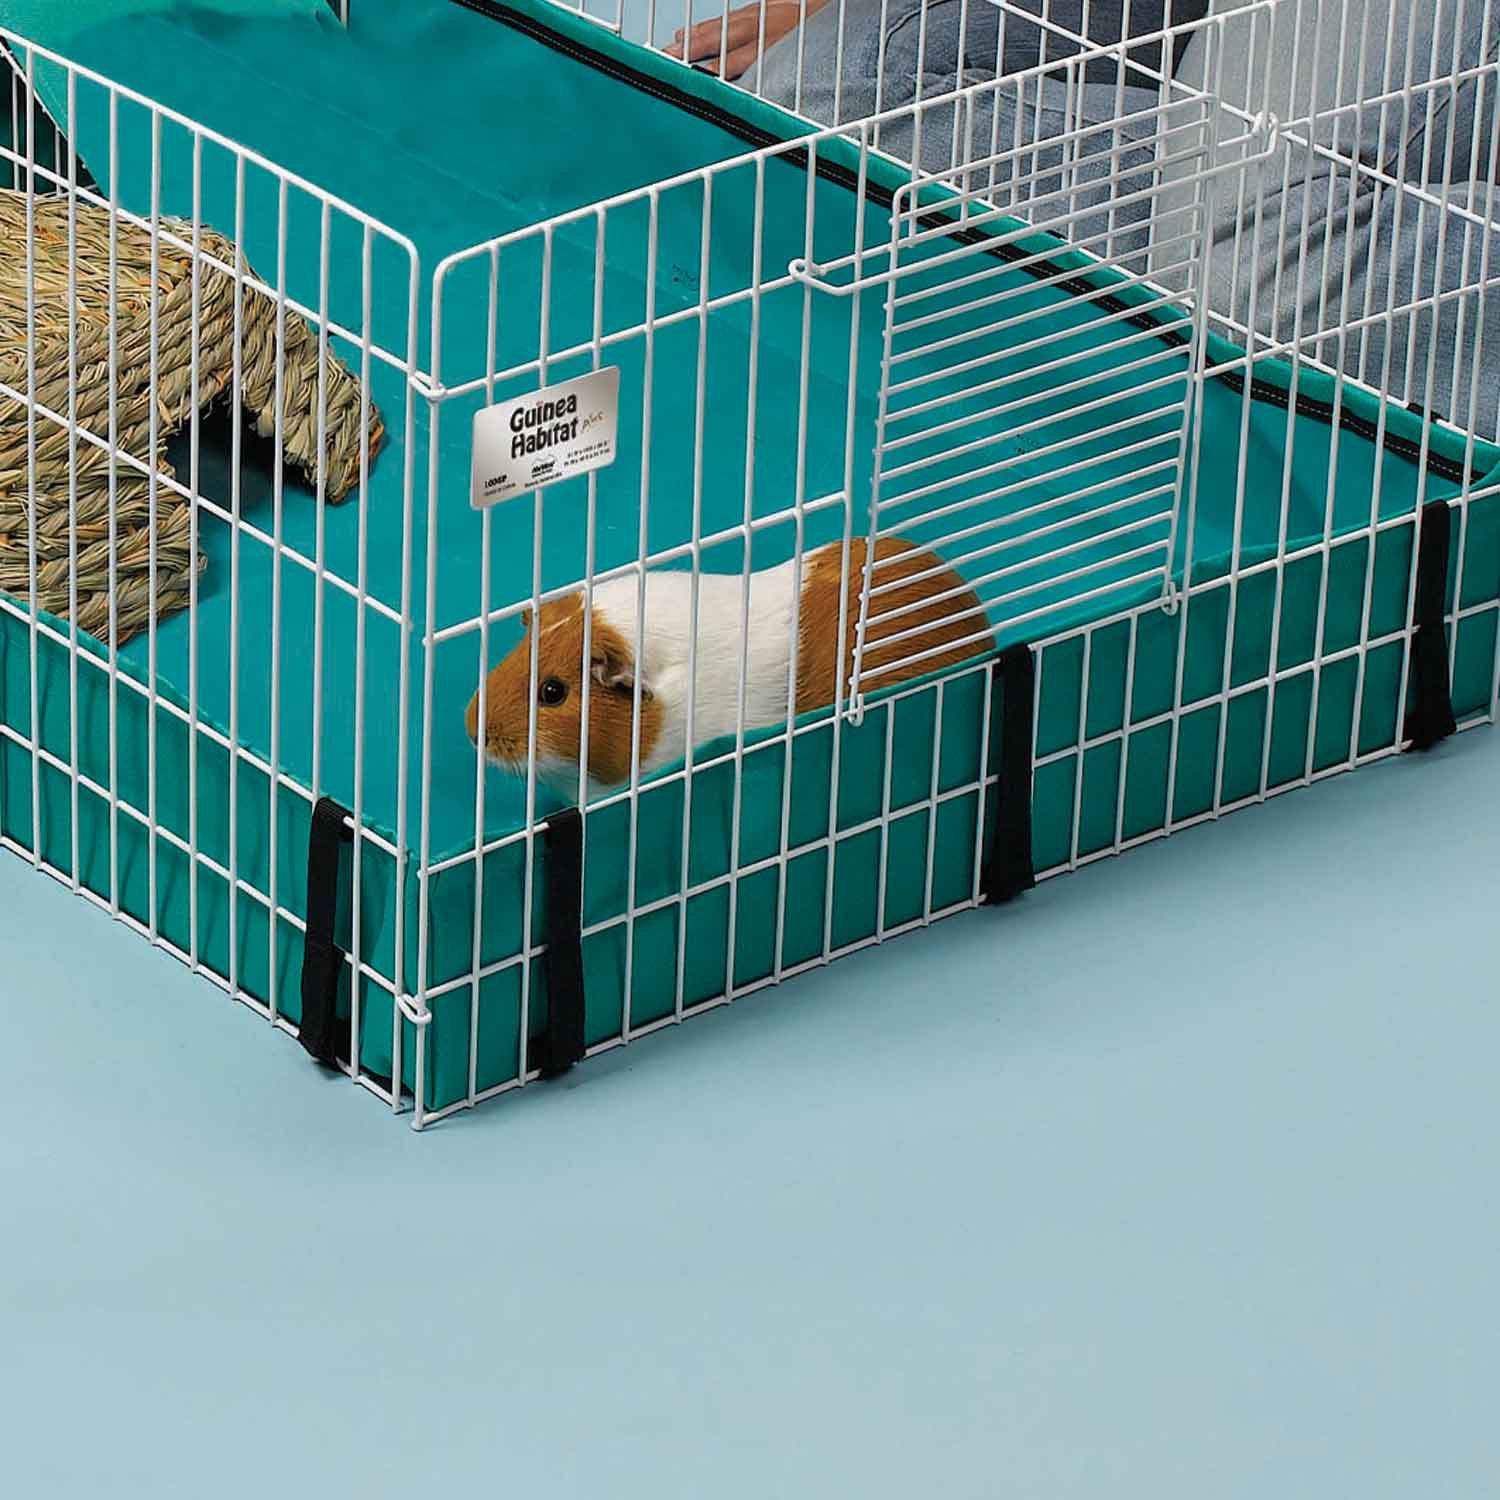 expandable guinea pig cage